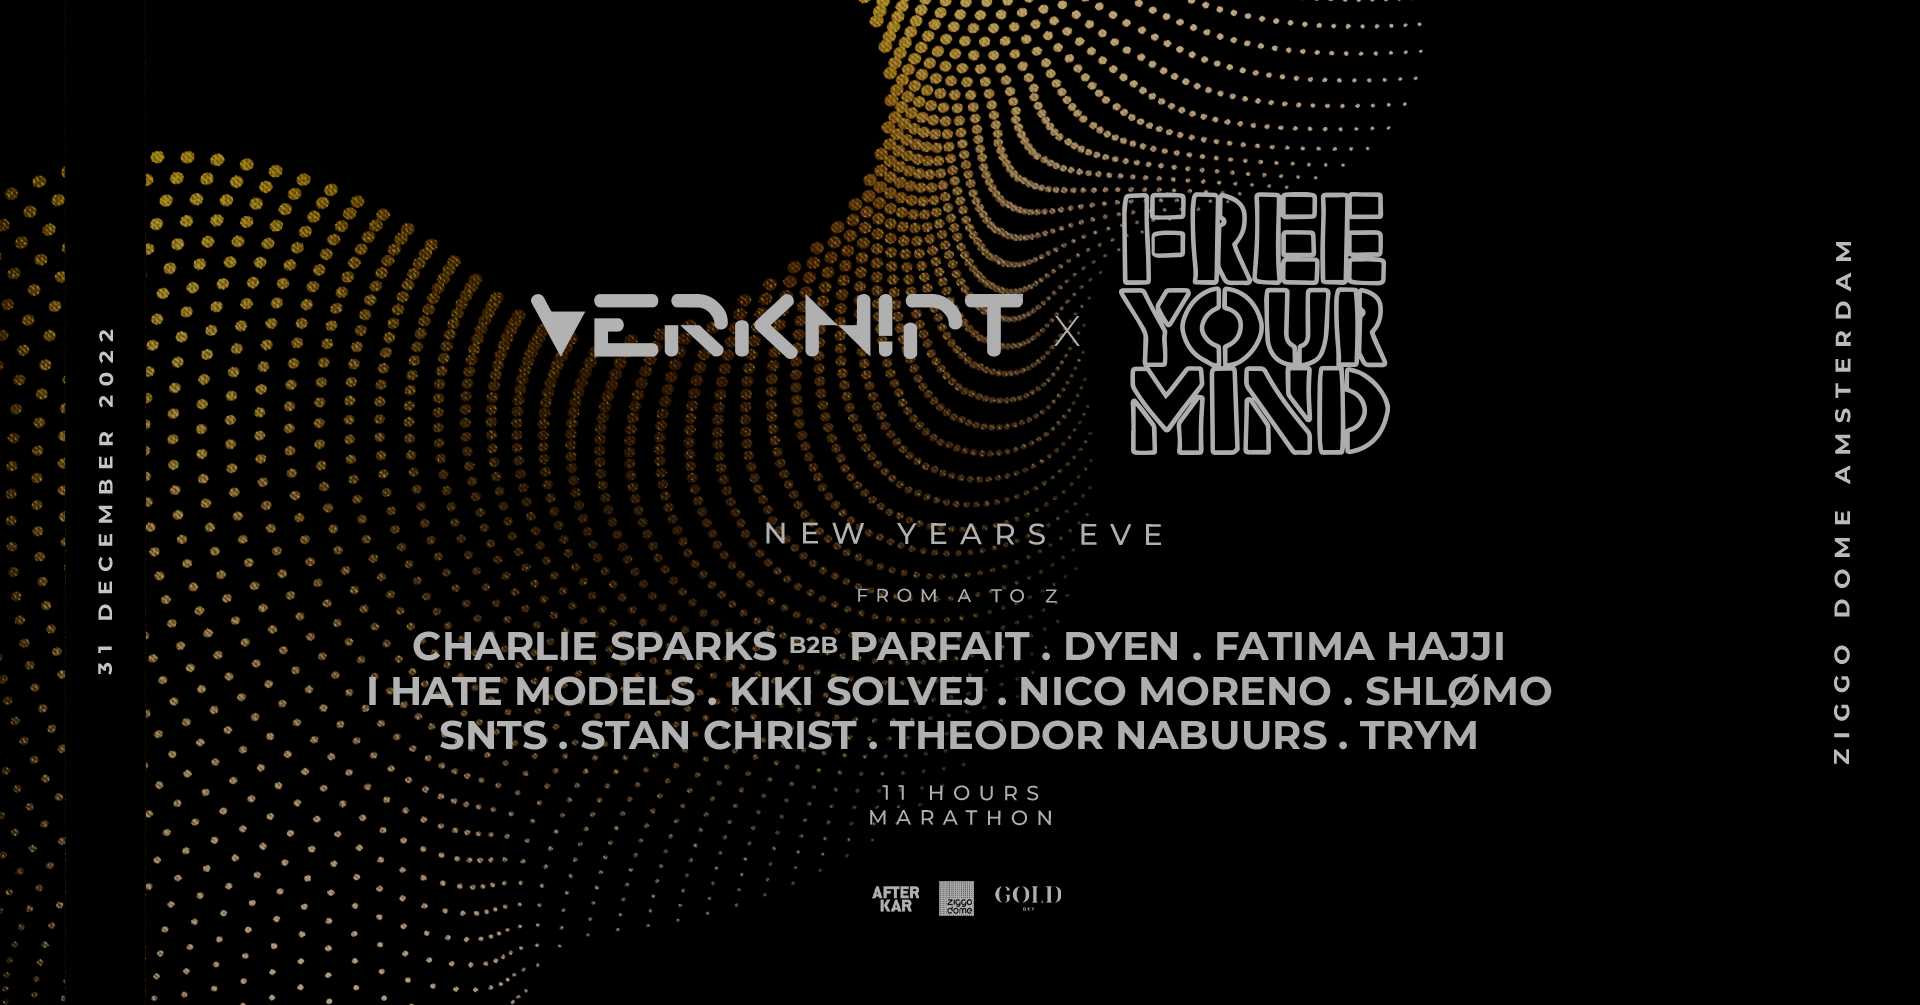 VERKNIPT x Free Your Mind: New Years Eve at Ziggo Dome, Amsterdam